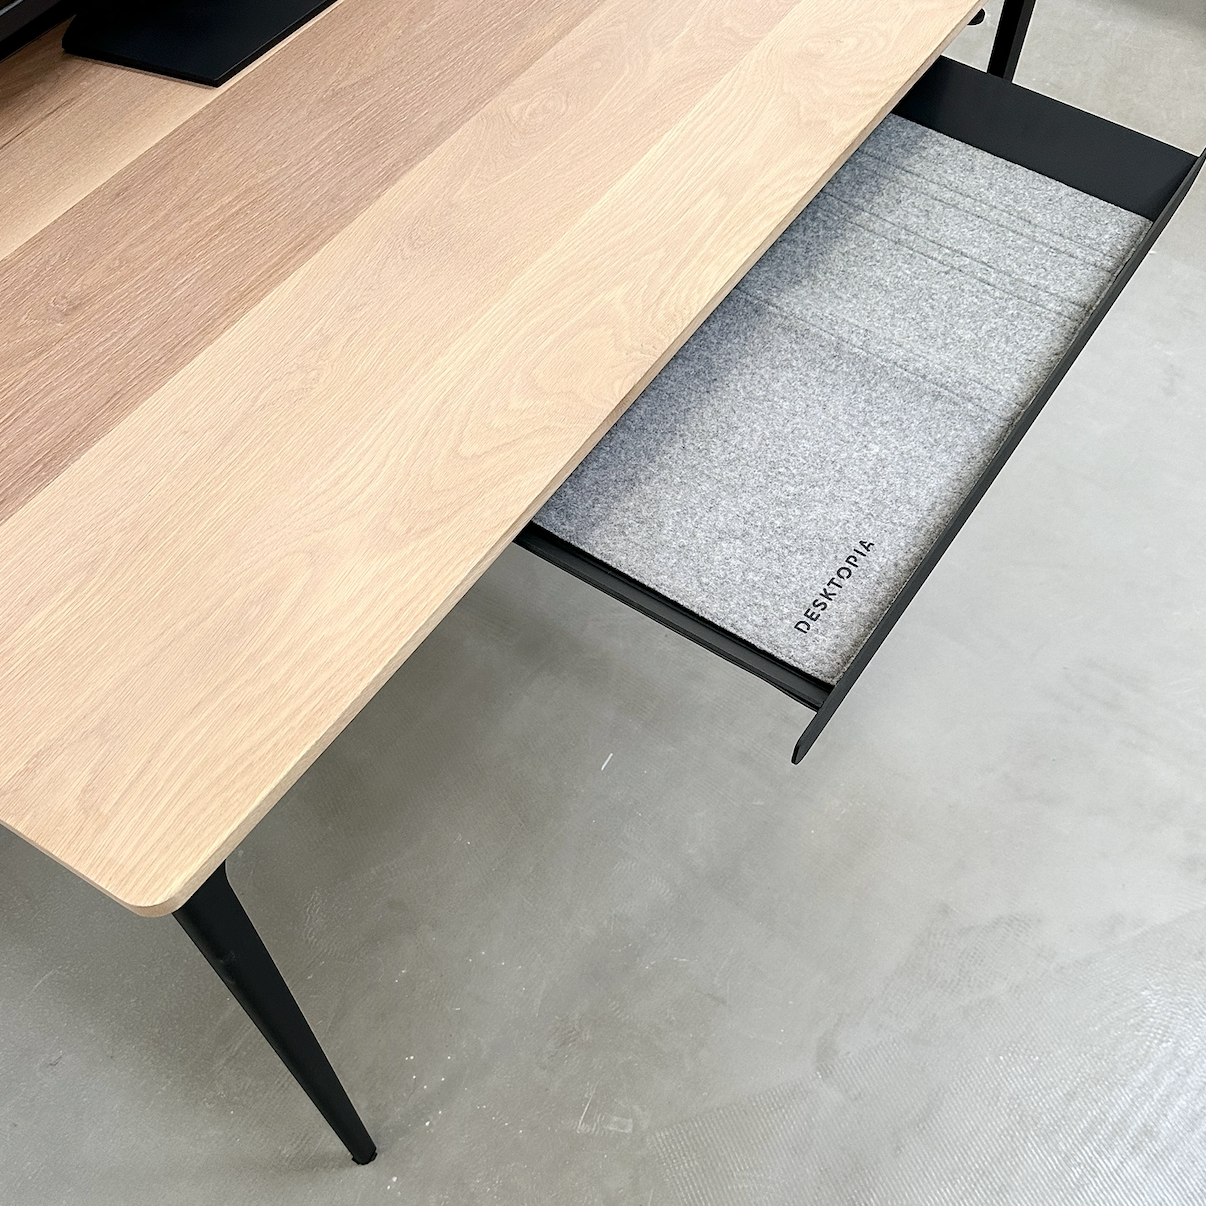 solid oak table tops, oak desk tops, full office interiors, desks